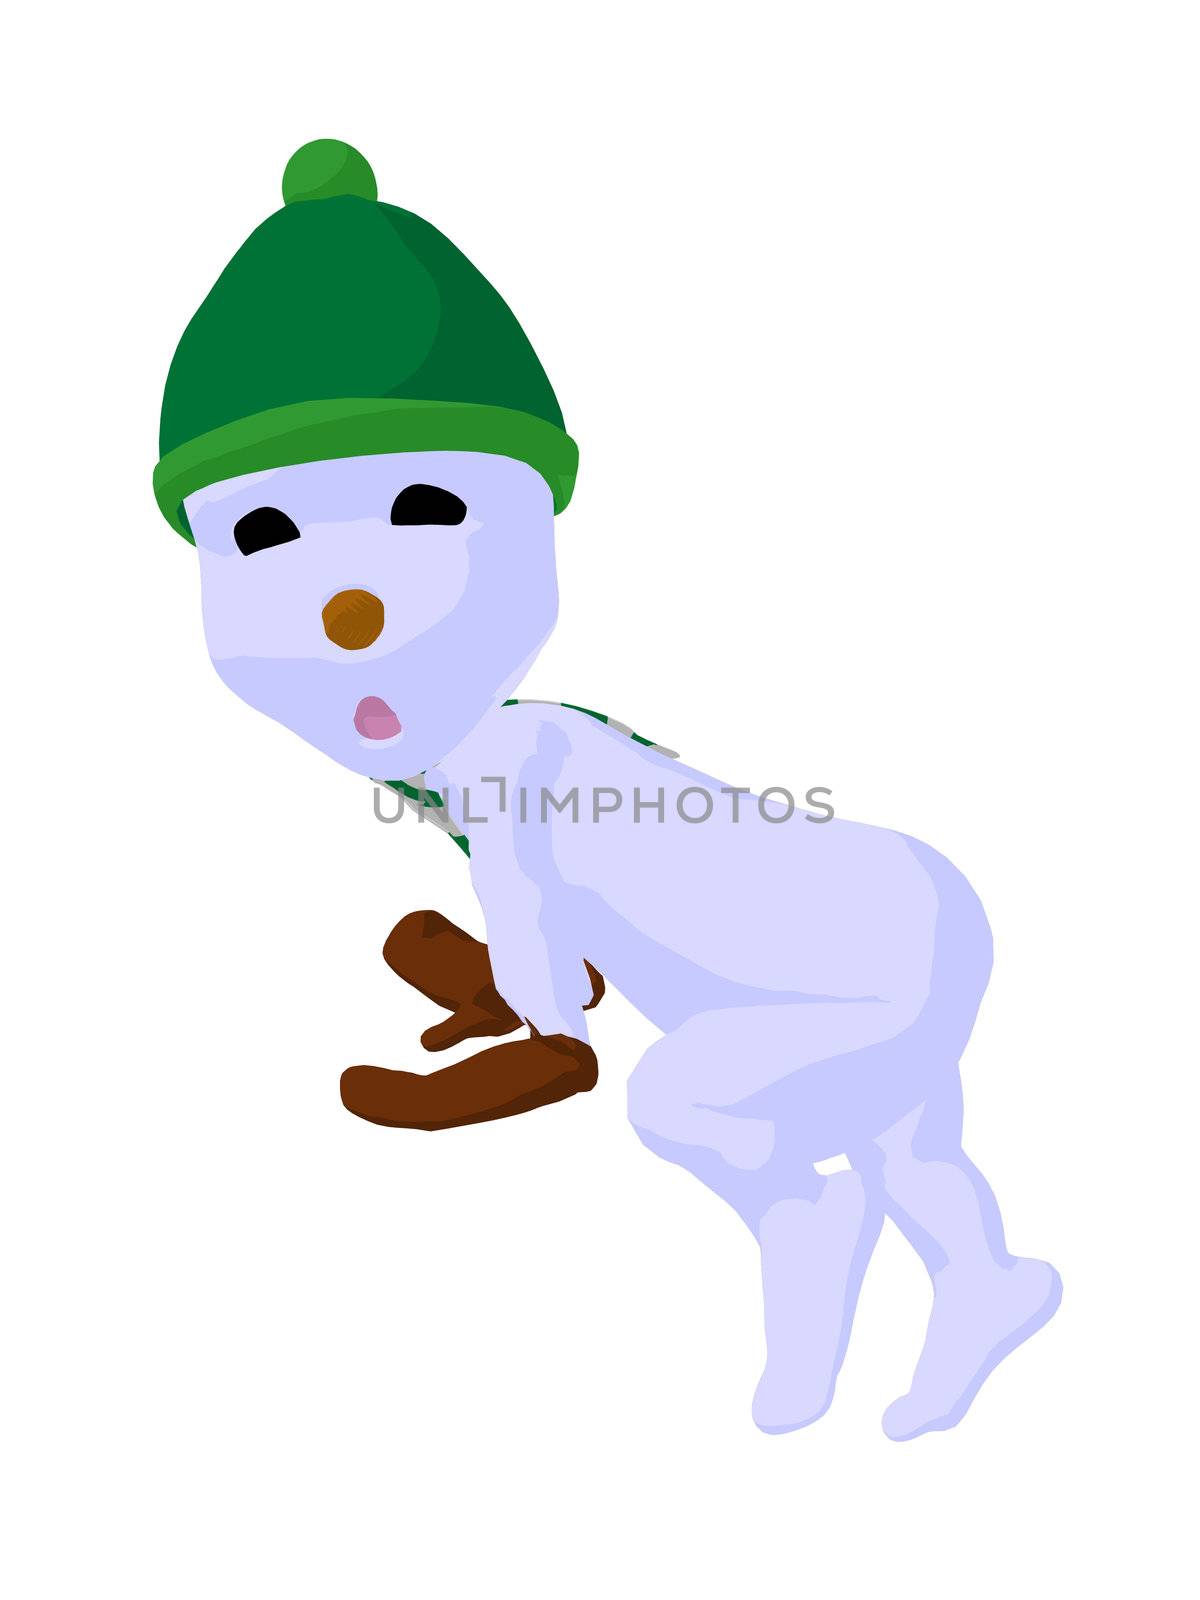 Snowboy silhouette illustration on a white background